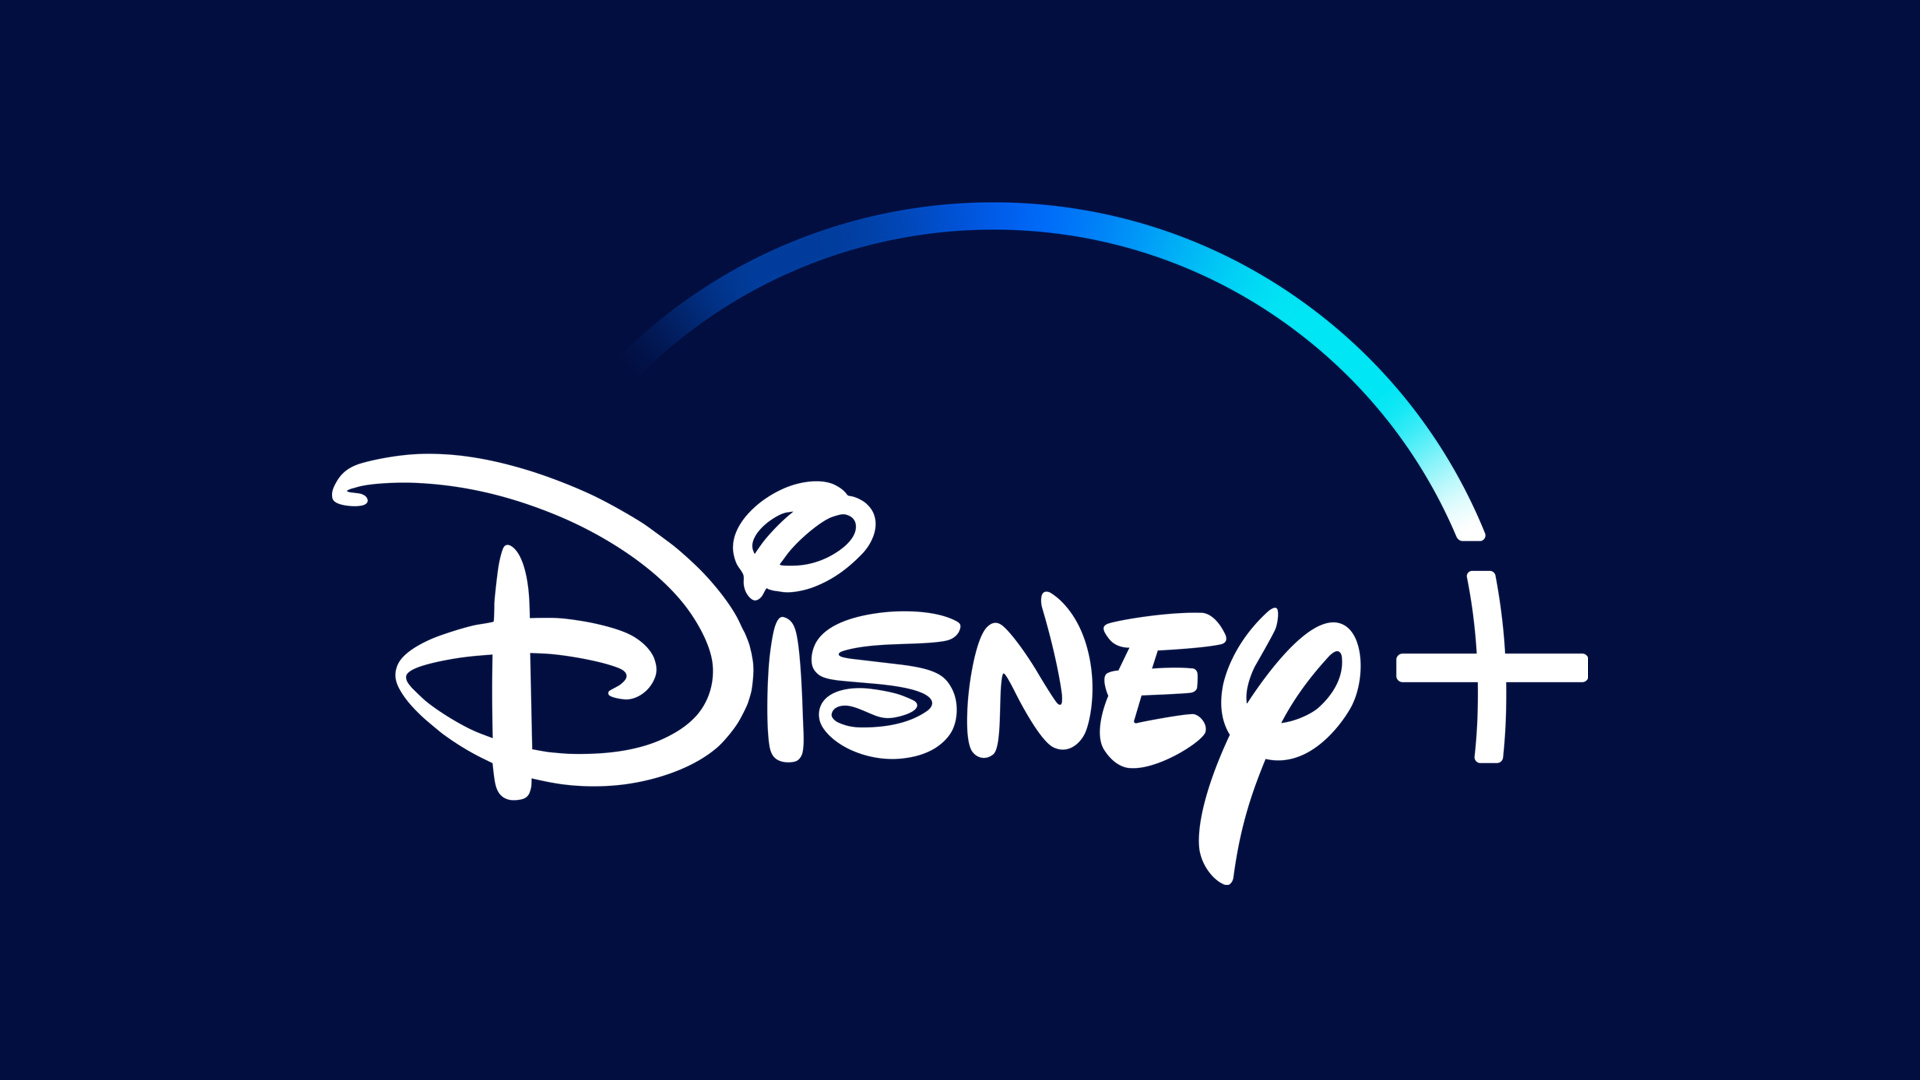 Disney+ old logo